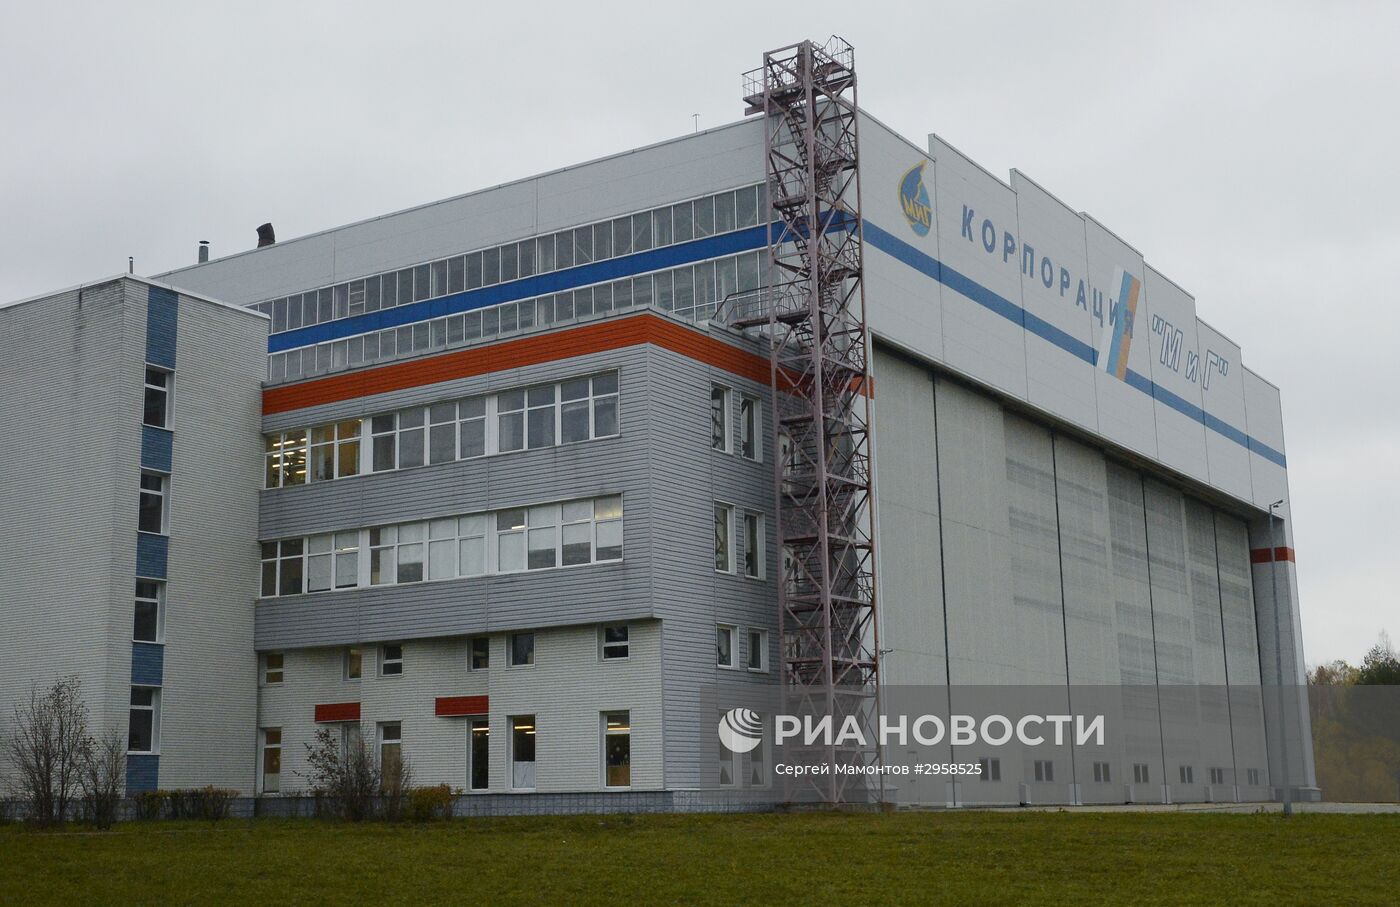 Вице-премьер РФ Д. Рогозин посетил производство корпорации "МиГ"